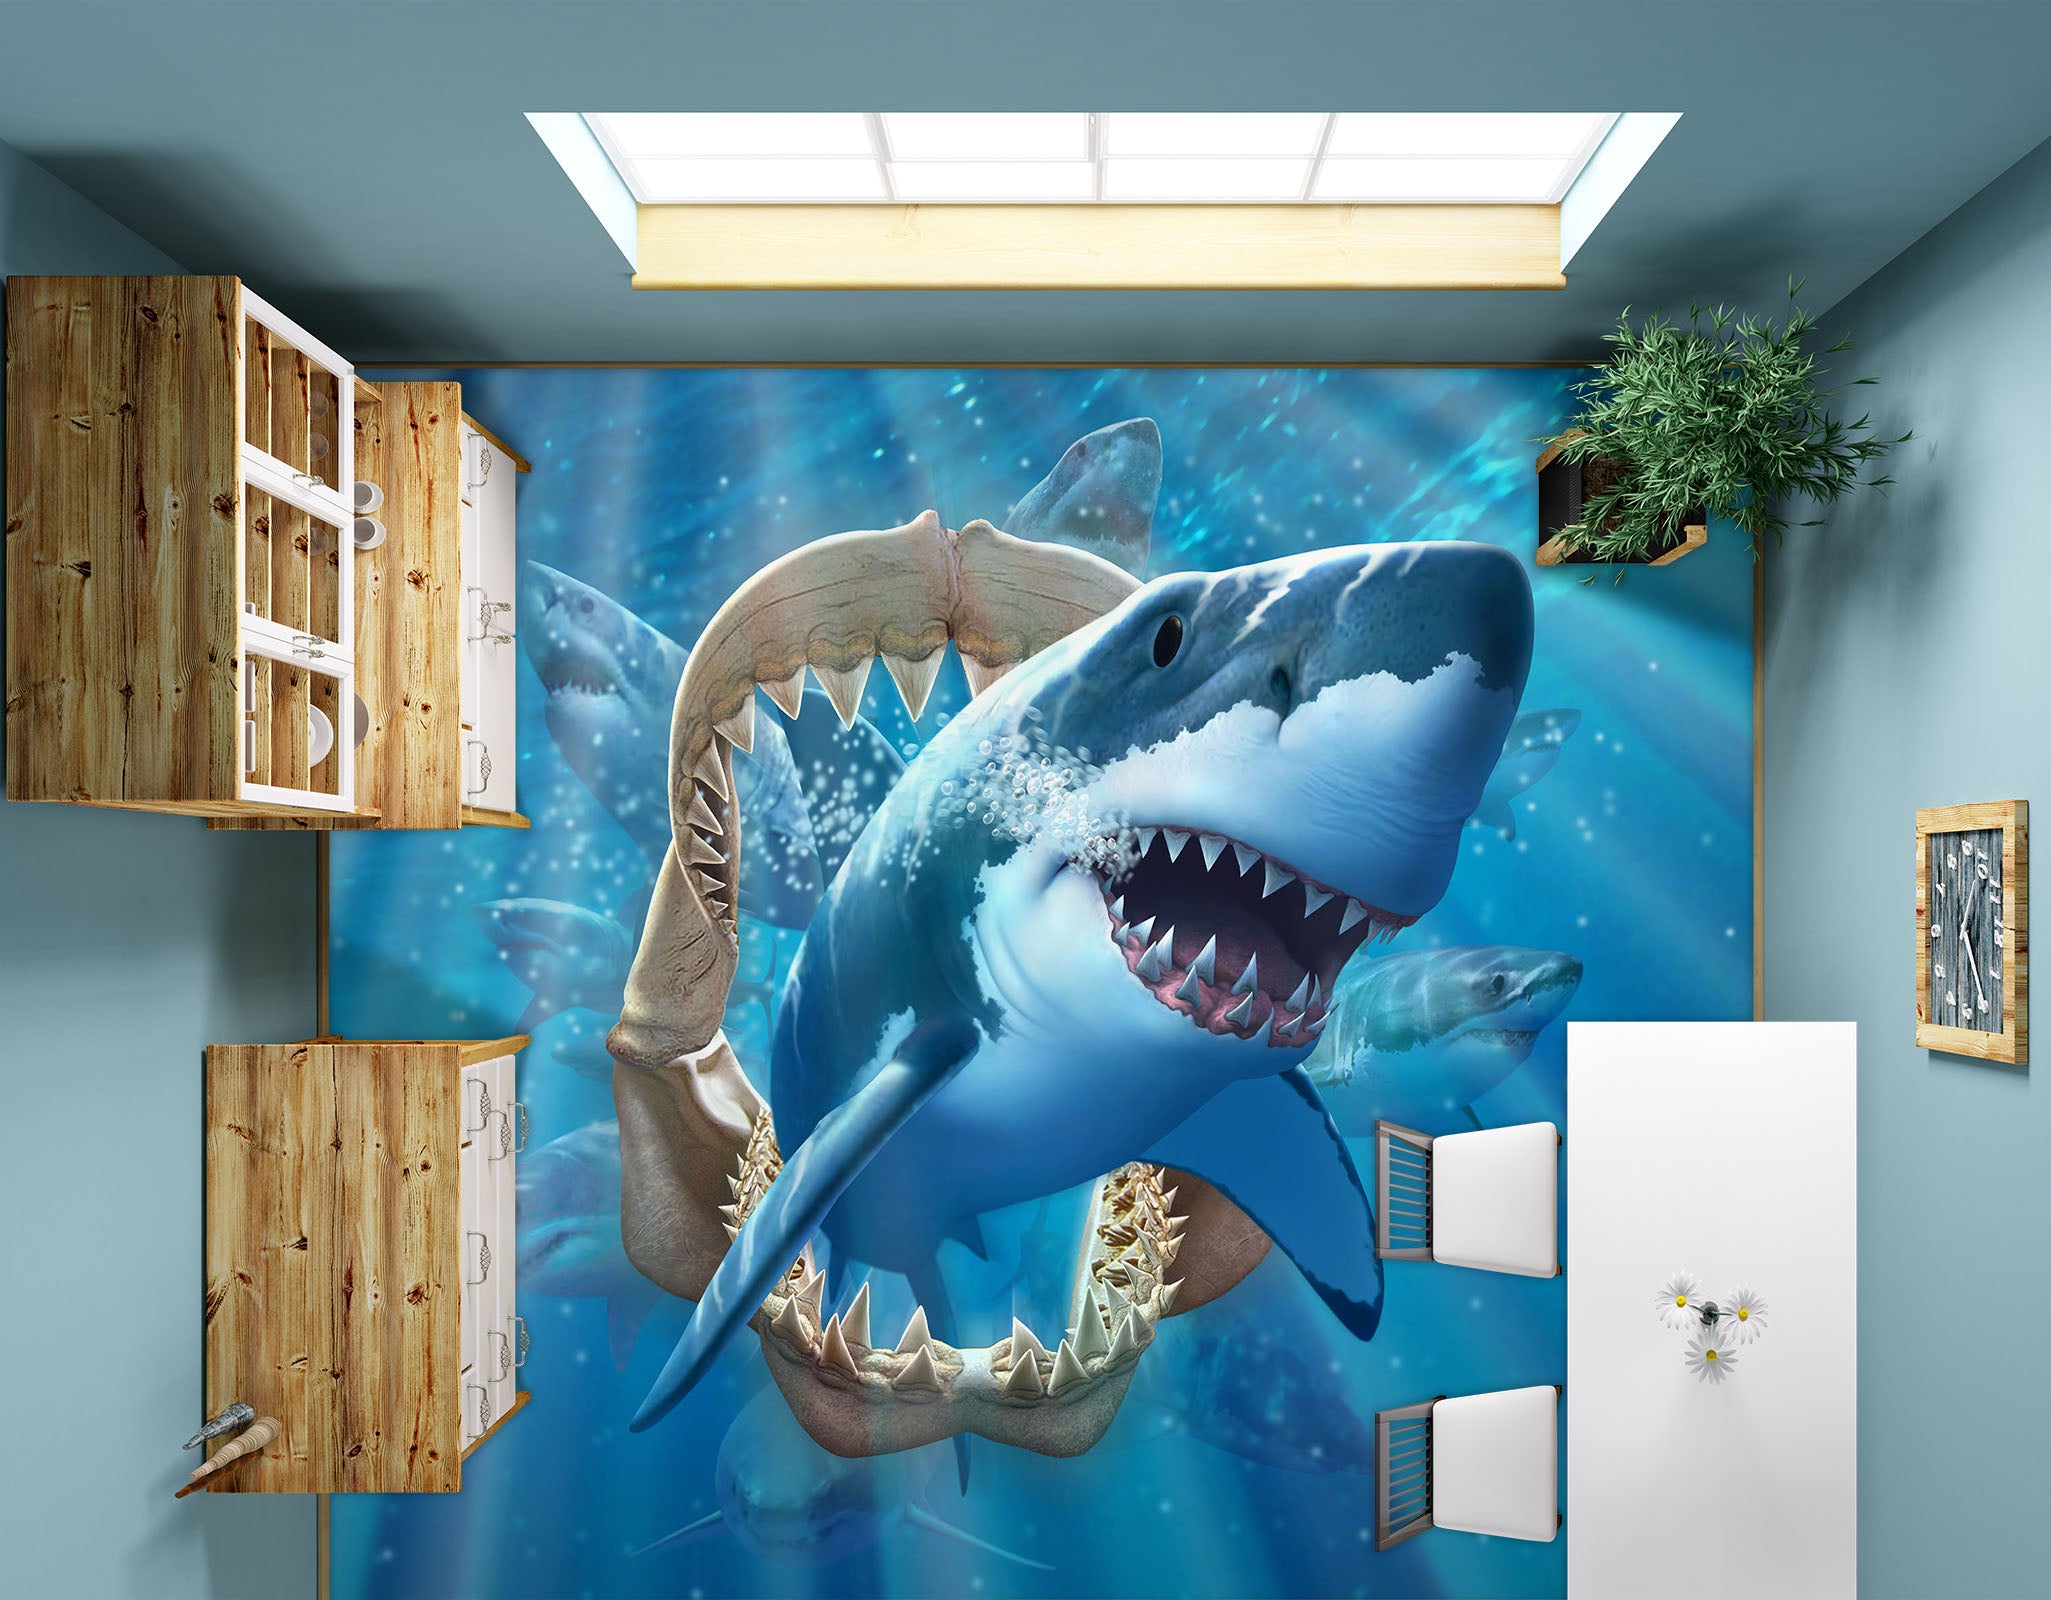 3D Shark 96220 Jerry LoFaro Floor Mural